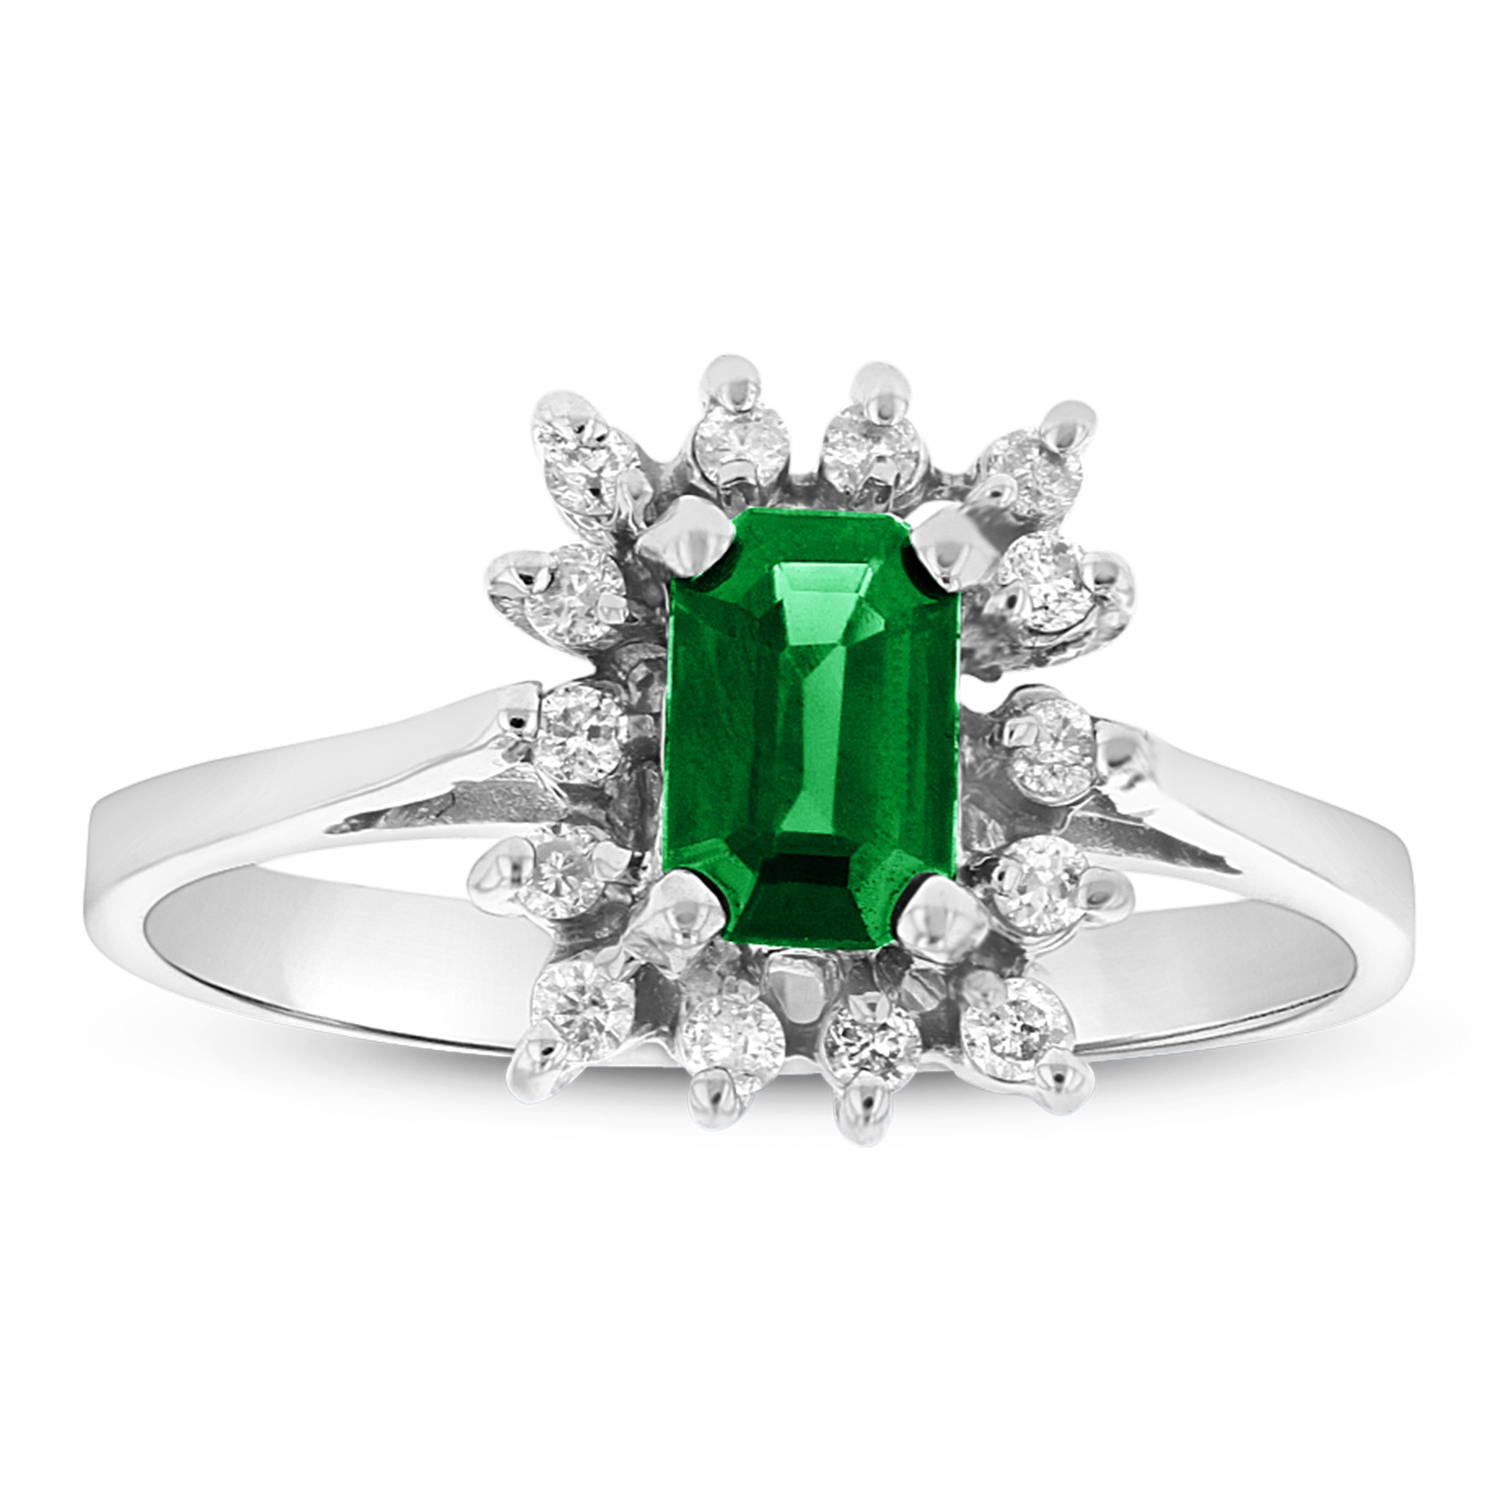 Emerald Cut Emerald and Diamond Ring set in 14k Gold